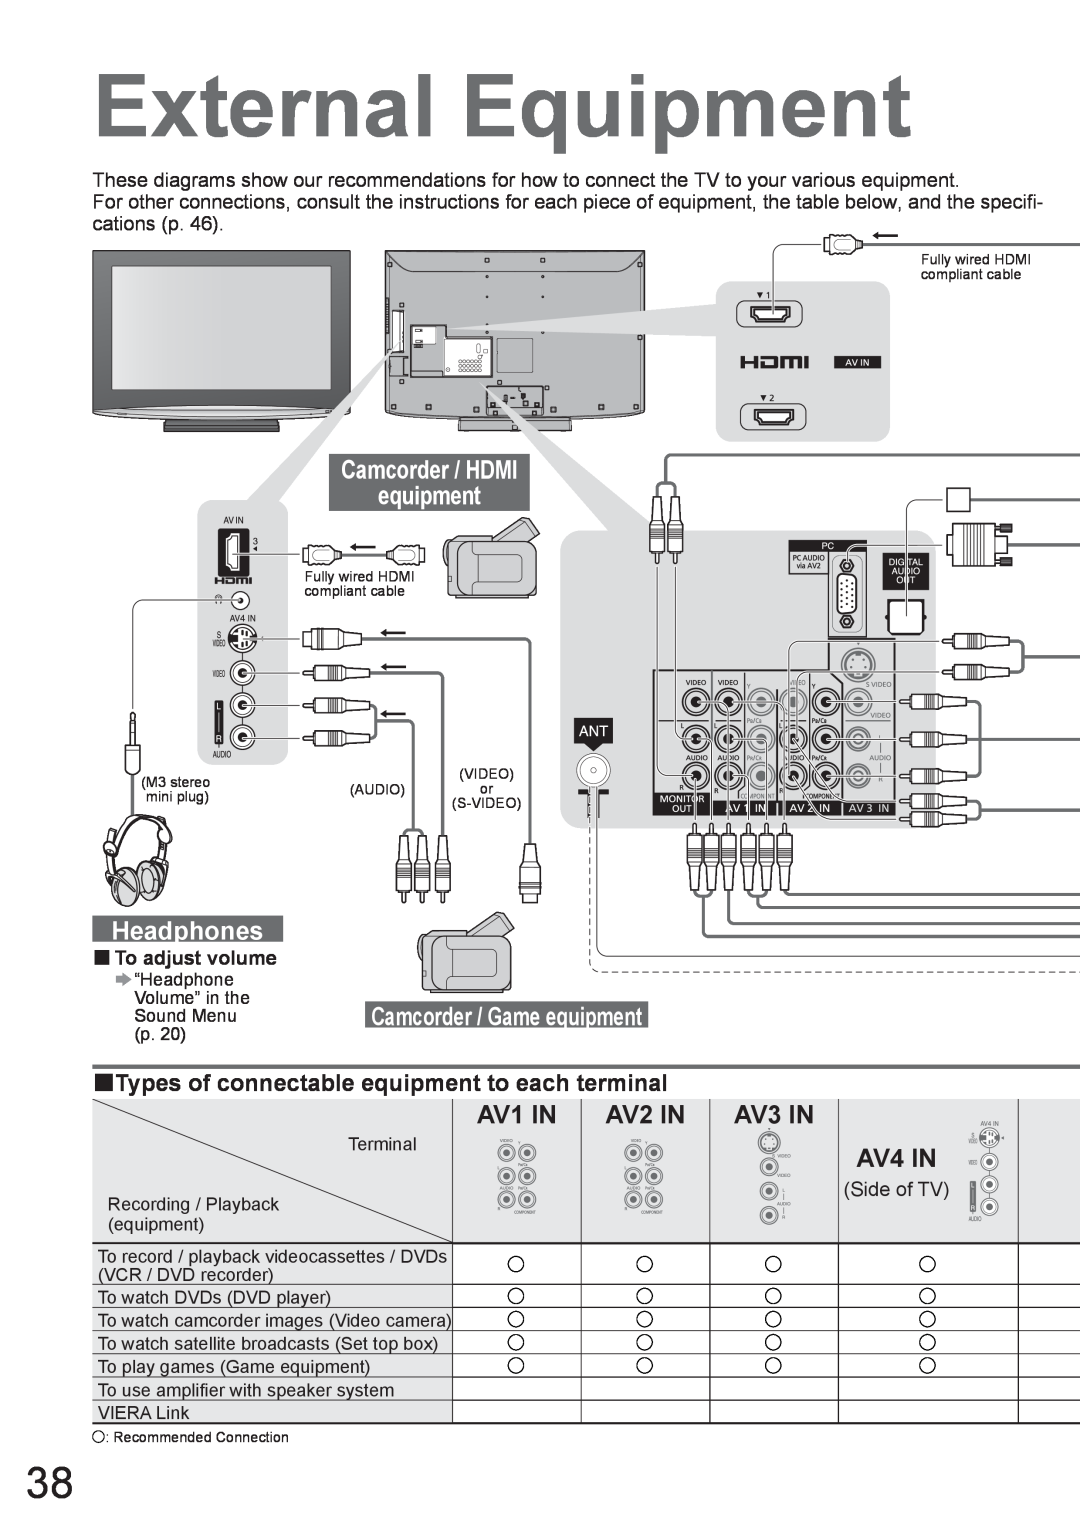 Panasonic TX-37LZD800A External Equipment, Camcorder / HDMI equipment, Headphones, Sound MenuCamcorder / Game equipment 